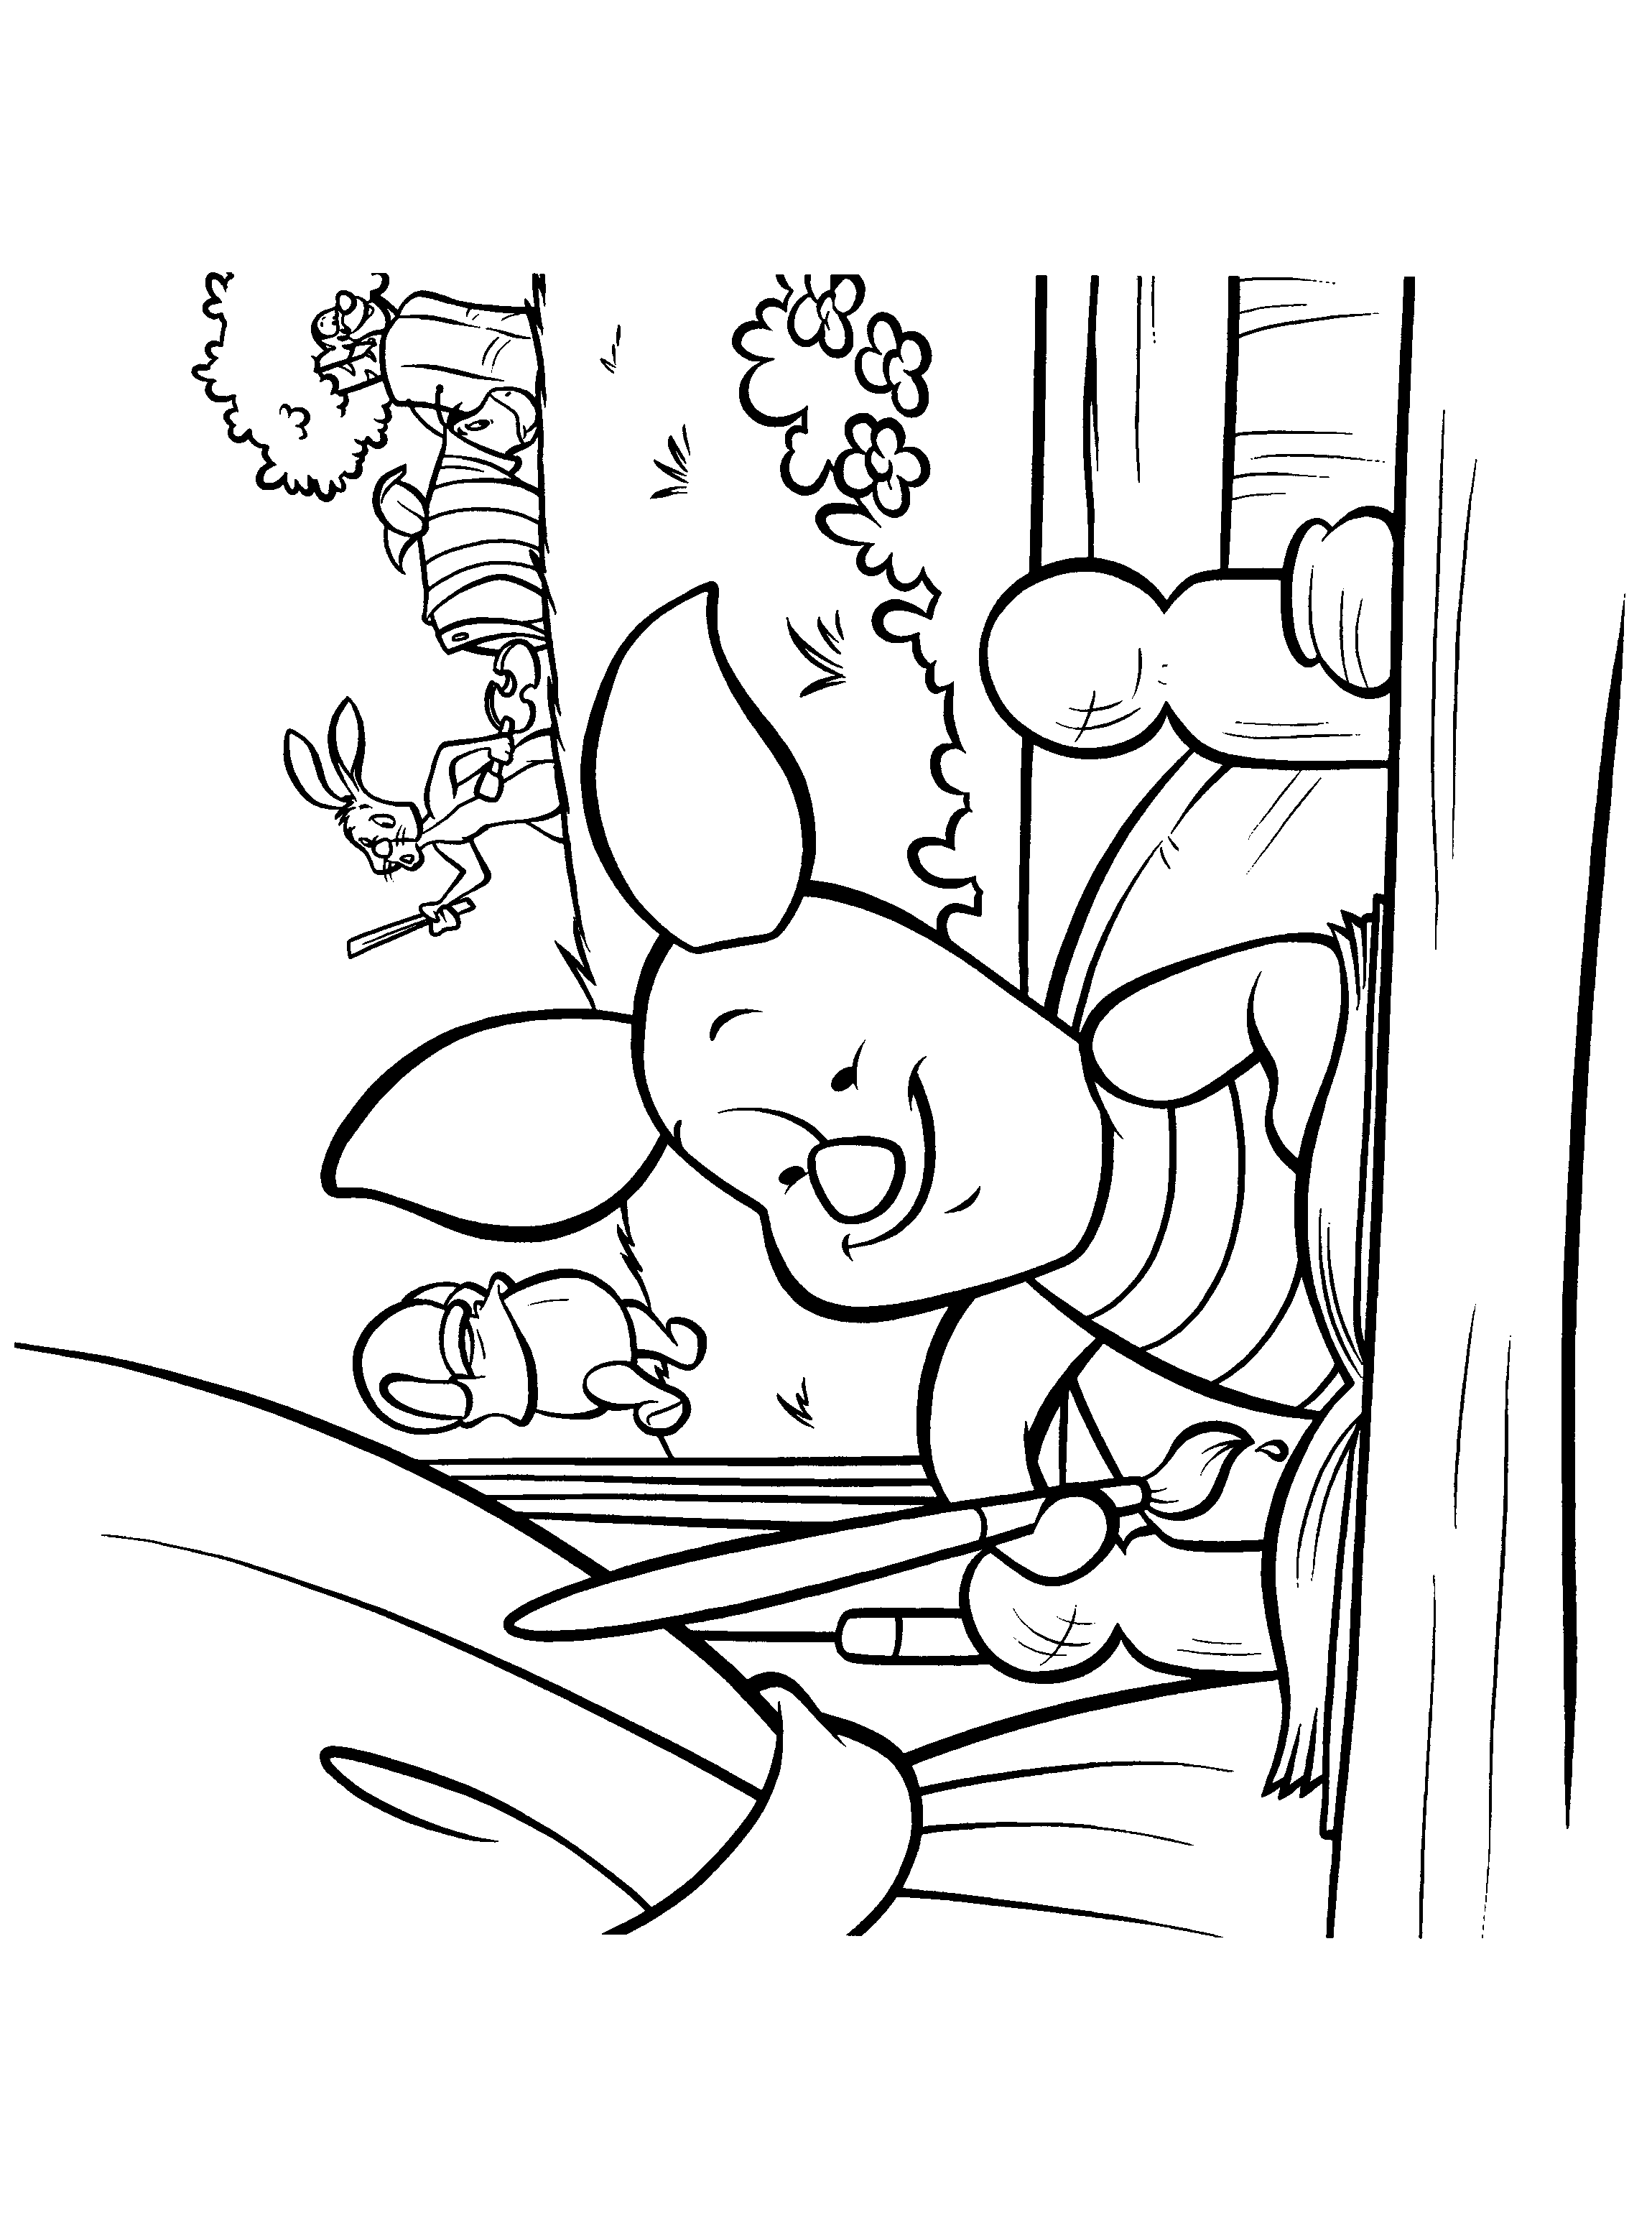 dibujo-para-colorear-winnie-the-pooh-imagen-animada-0123